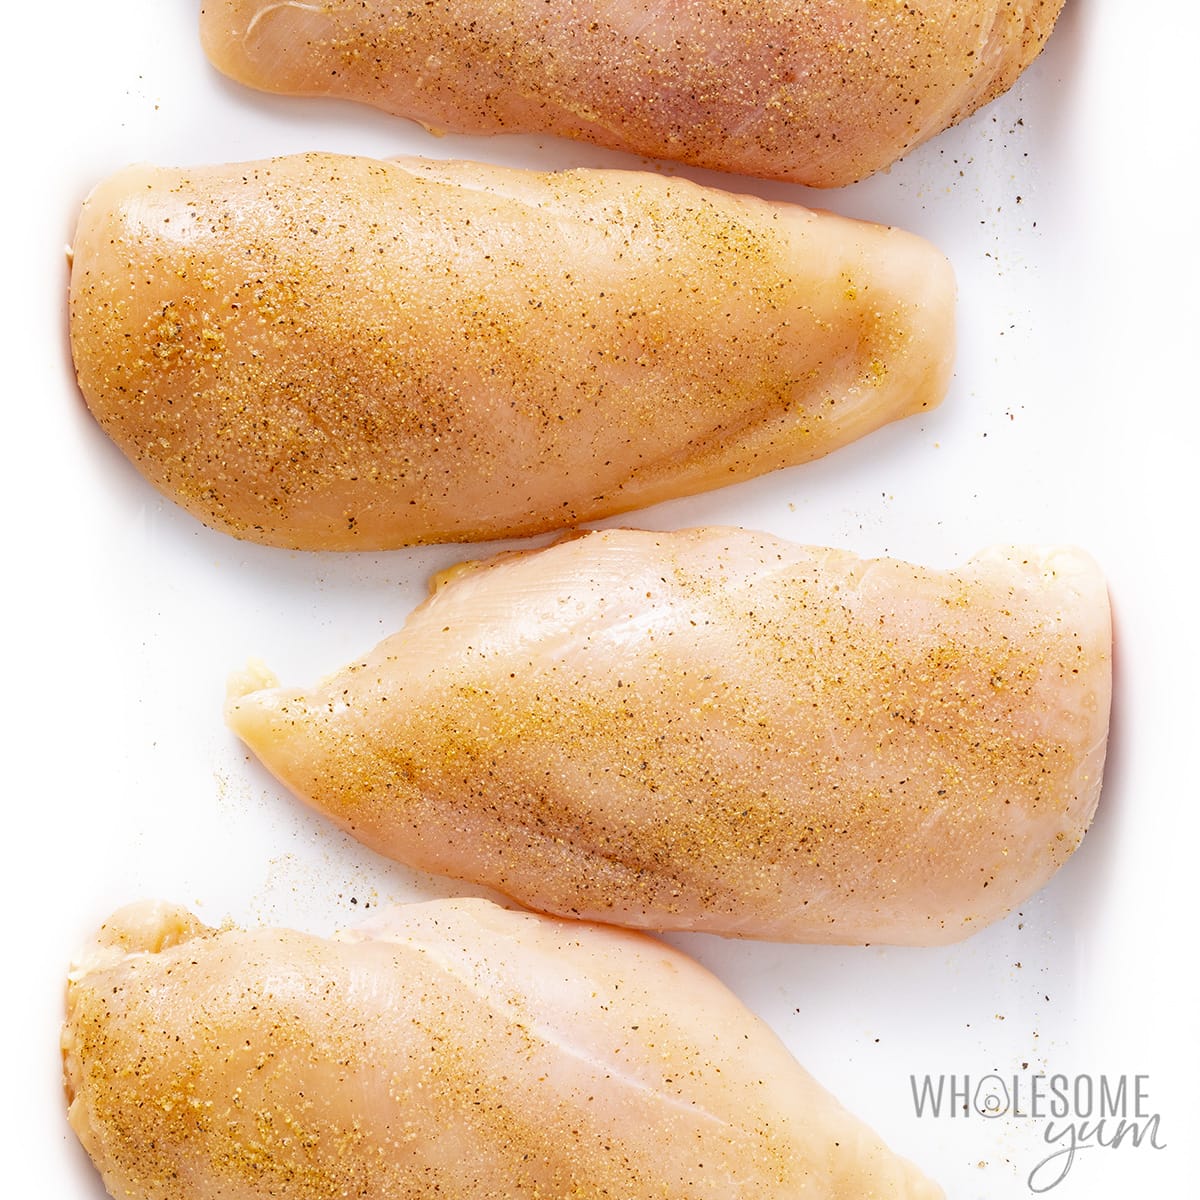 Seasoned chicken breasts in a baking dish.